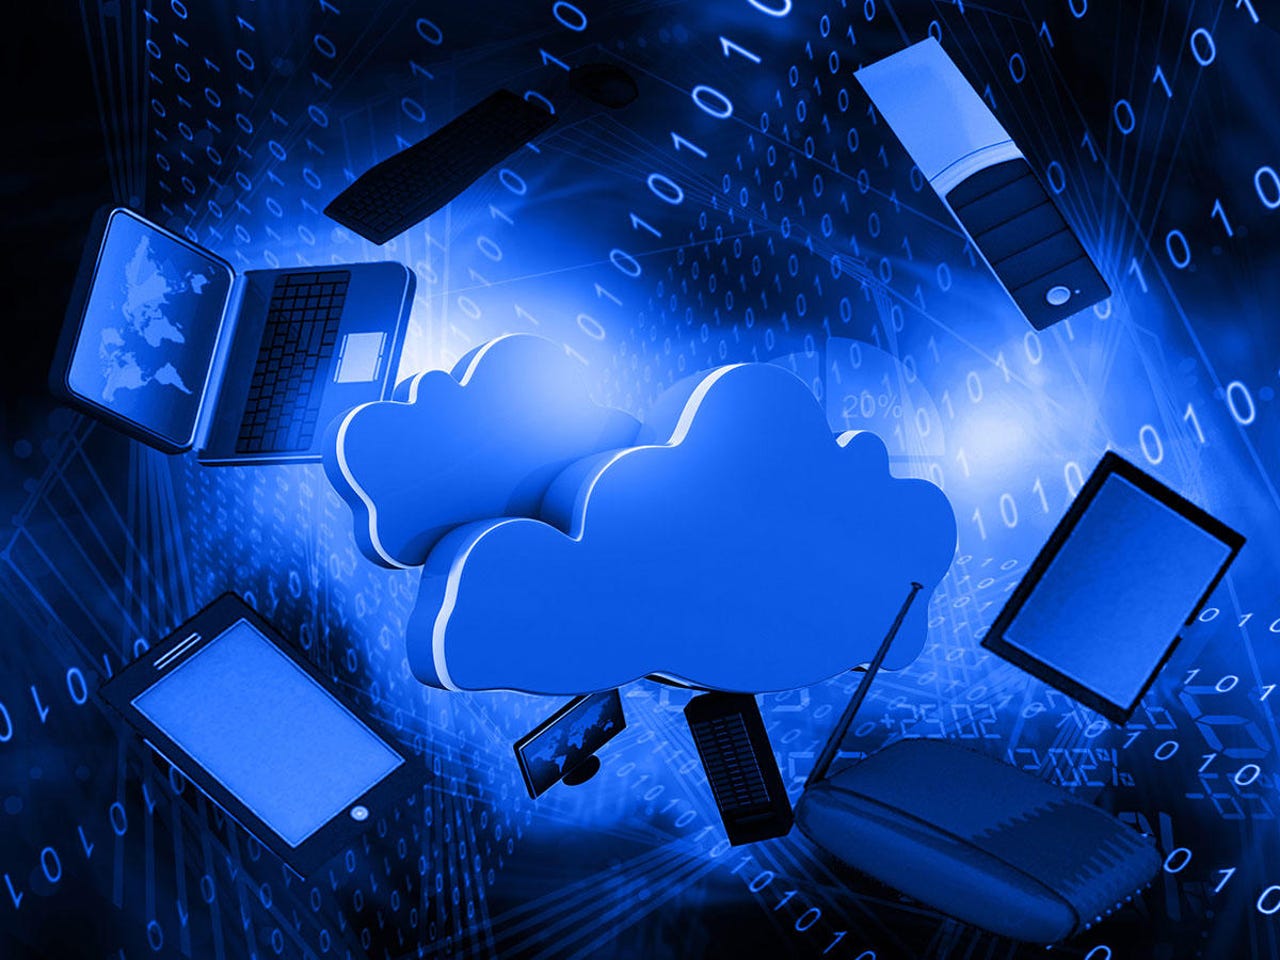 Cloud computing network